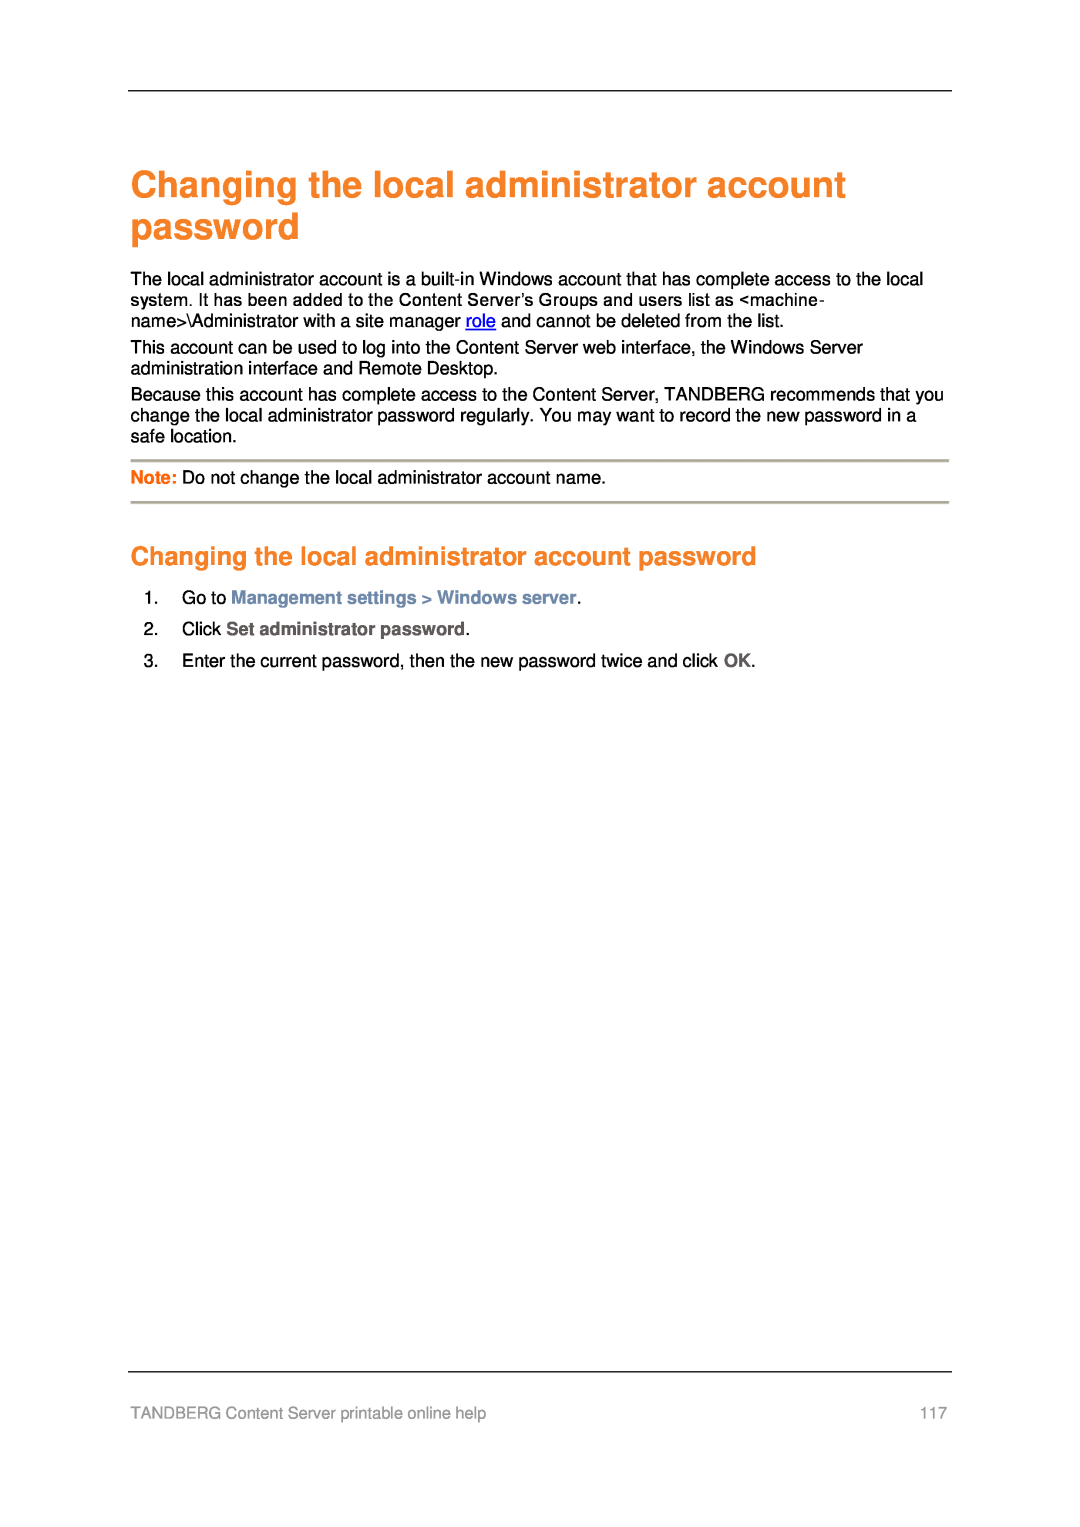 TANDBERG D1459501 manual Changing the local administrator account password, Click Set administrator password 